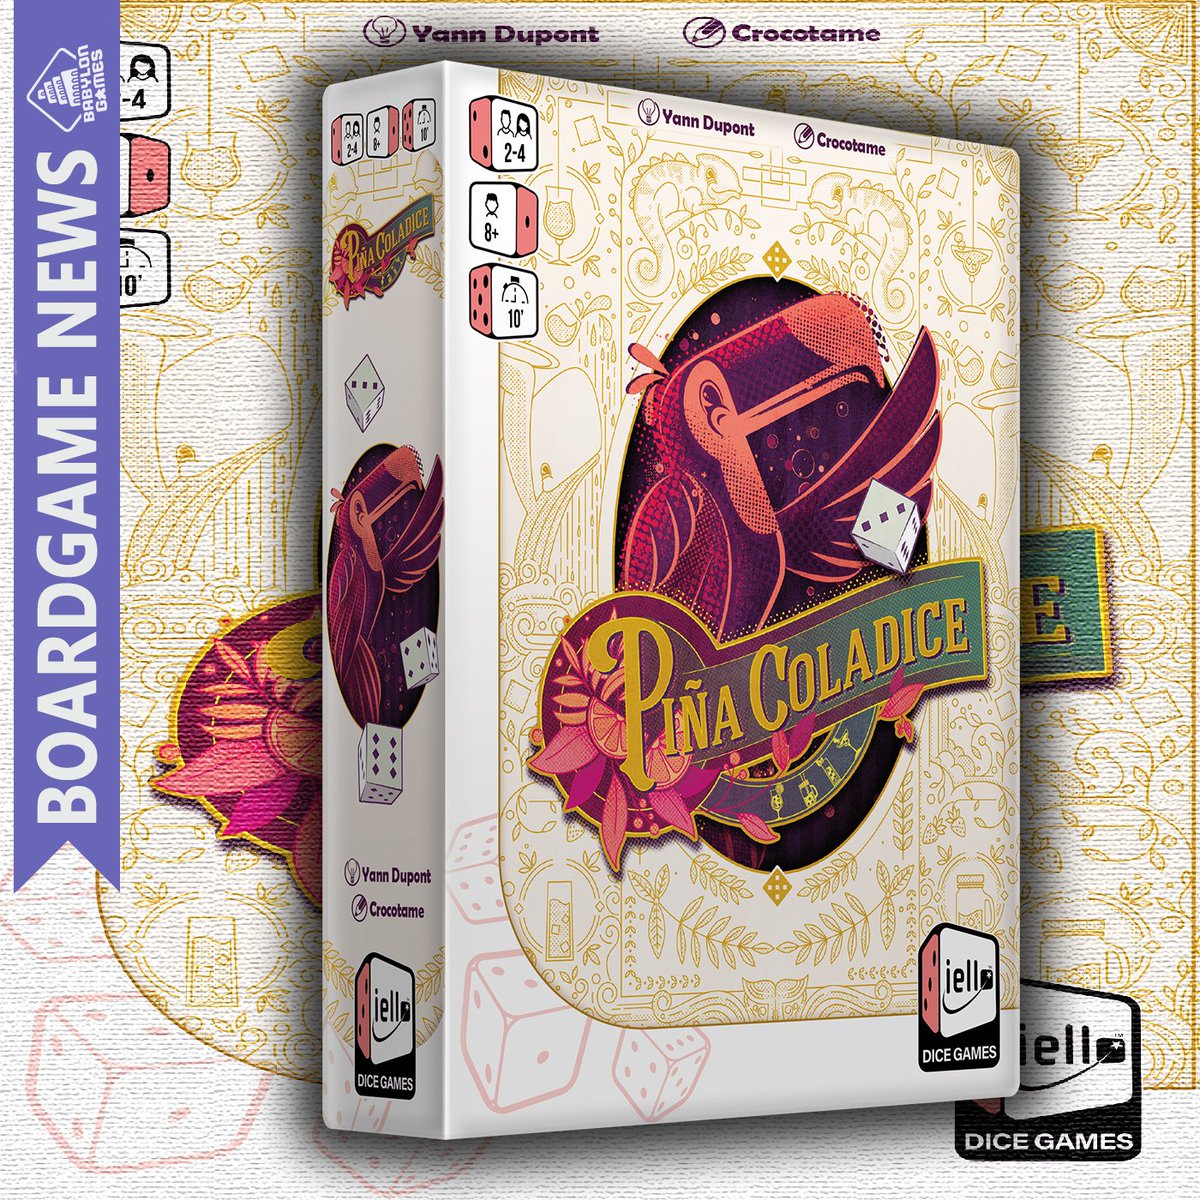 Piña Coladice by @IELLO_France 

📐: Yann Dupont
🎨: Crocotame
🧍: 2-4 players
⏱️: 10-20 min

boardgamegeek.com/boardgame/4150…

#boardgames #juegodemesa #geek #meeple #brettspiele #game #boardgamer #graplanszowa #jeuxdesociete #boardgame